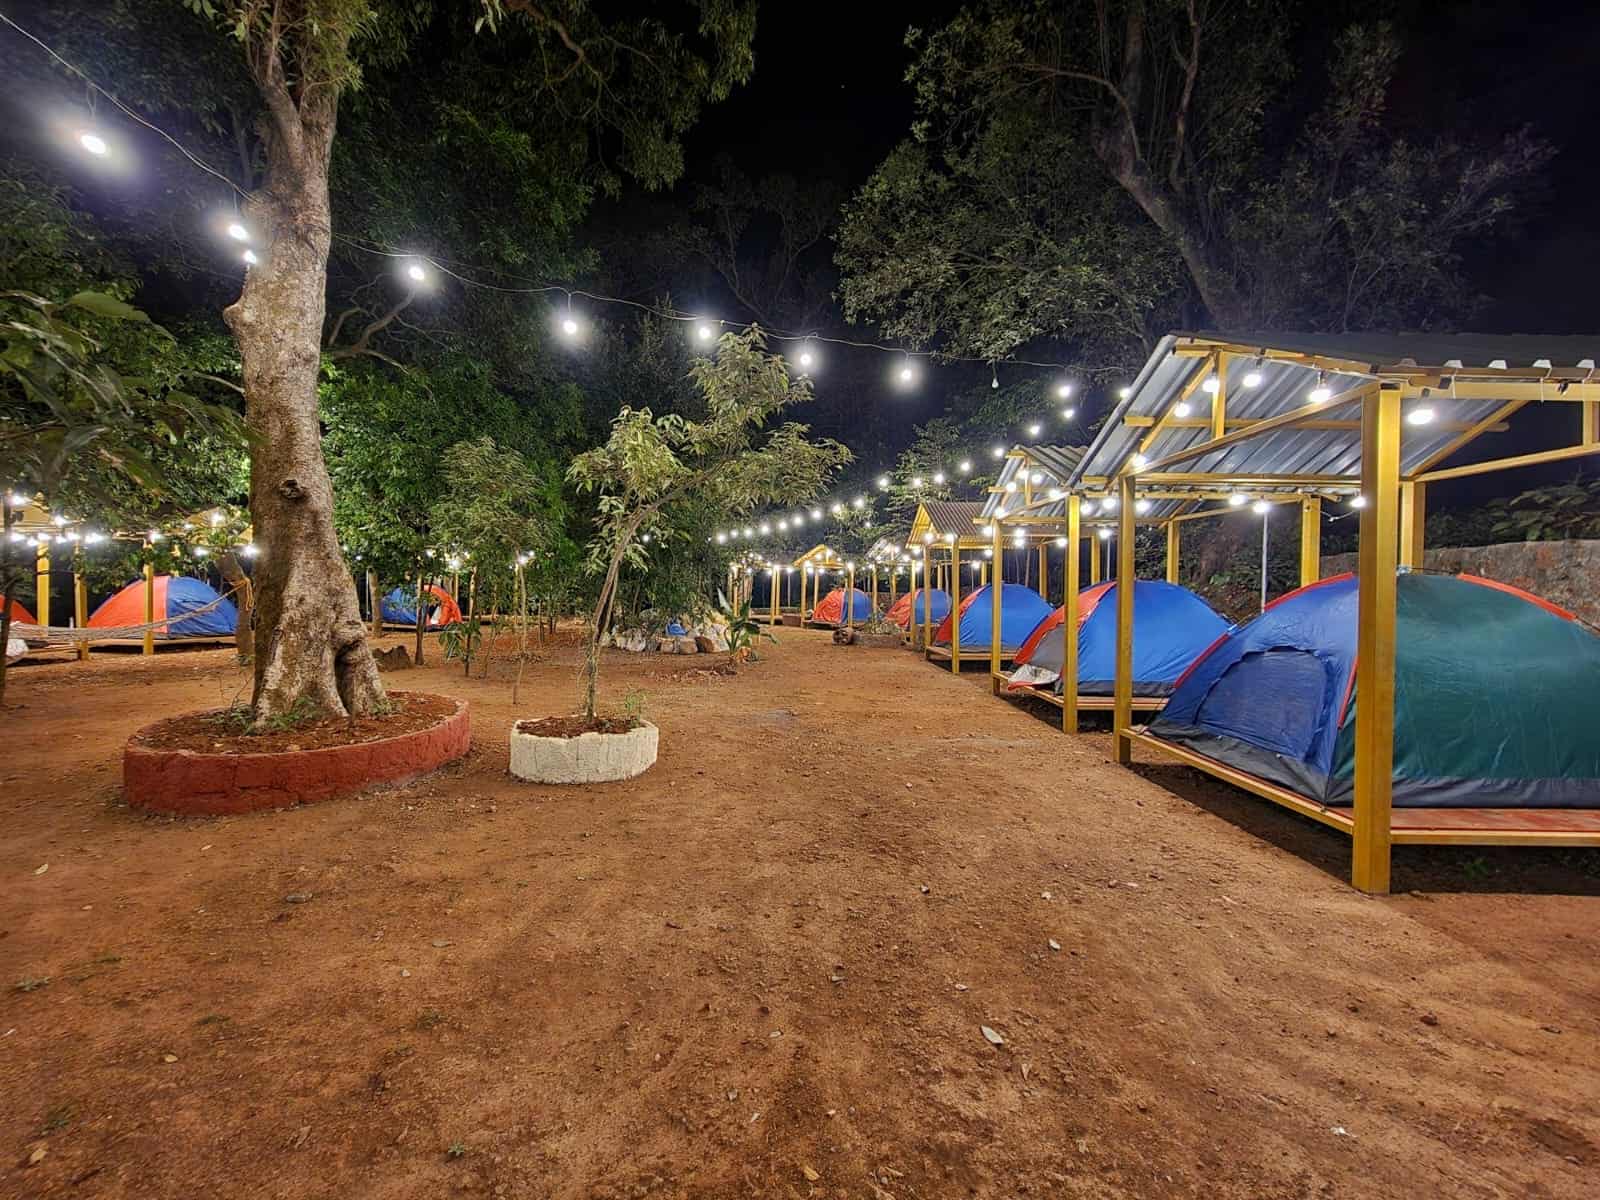 https://roundtheworld.in/wp-content/uploads/2022/02/Matheran-Forest-Camping-Camp-B-05-1.jpeg